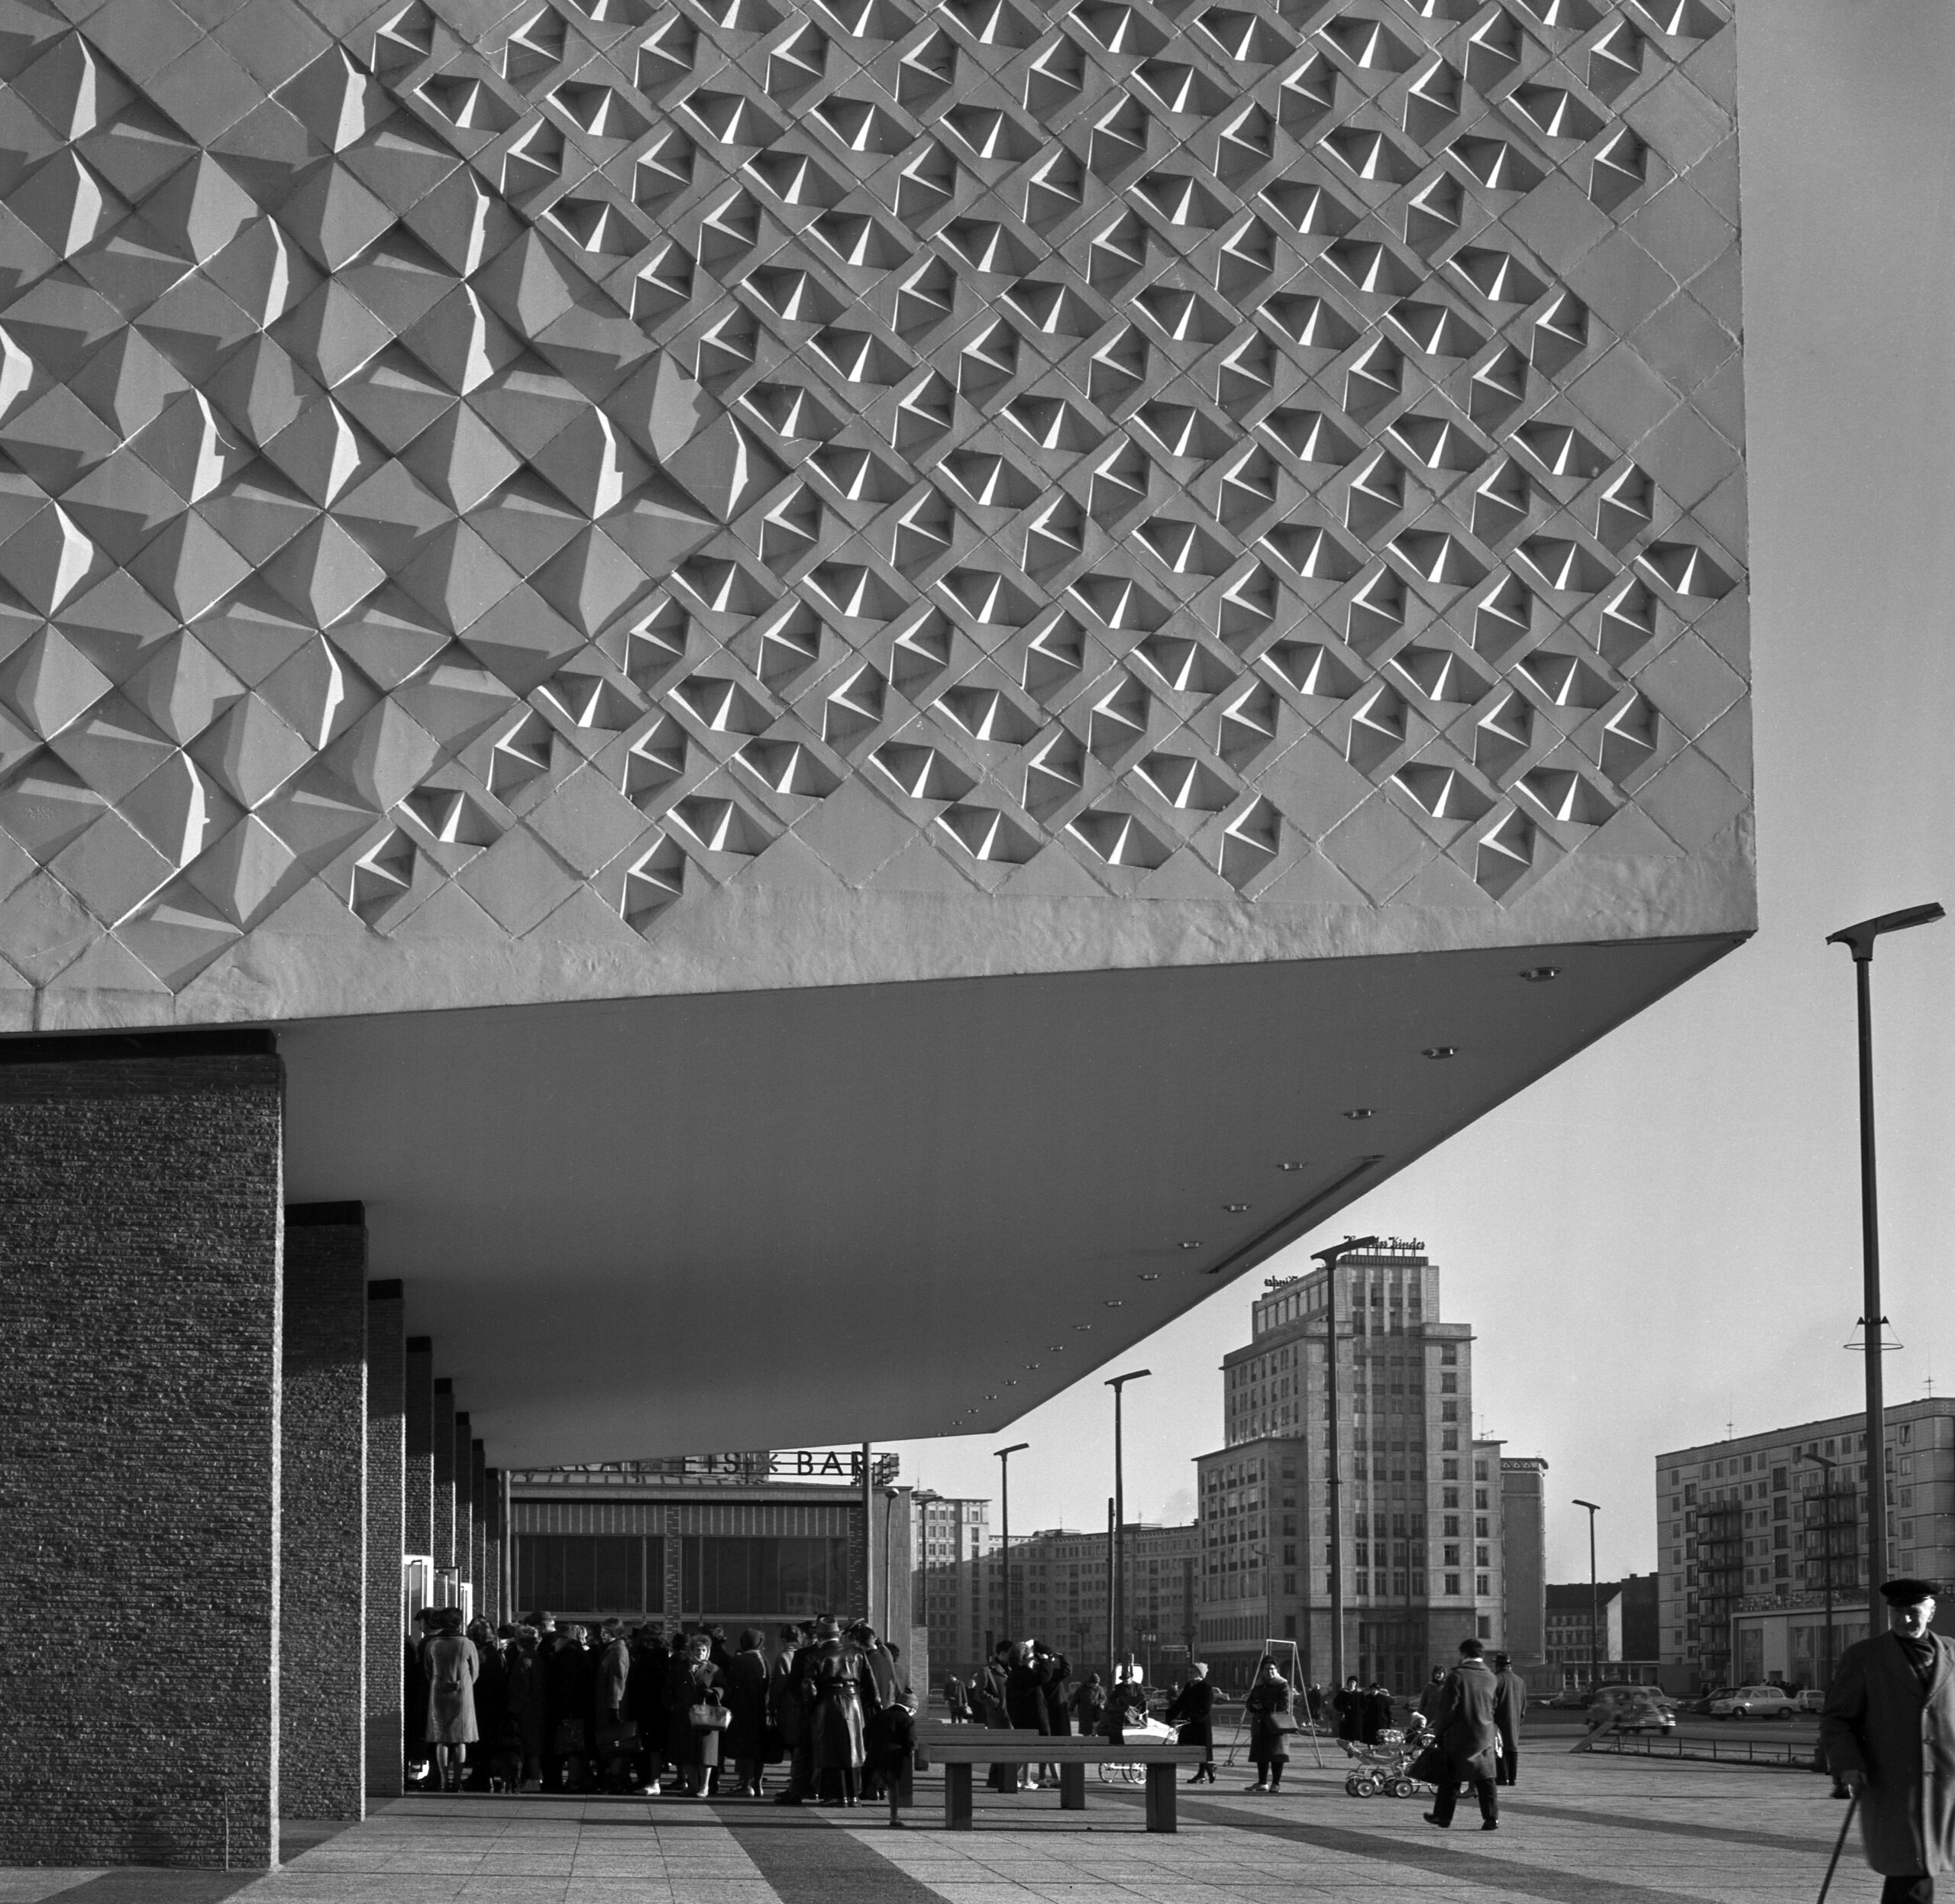 Detailansicht der Fassade des Kino International in der Karl-Marx-Allee, 1964. Foto: Imago/Frank Sorge